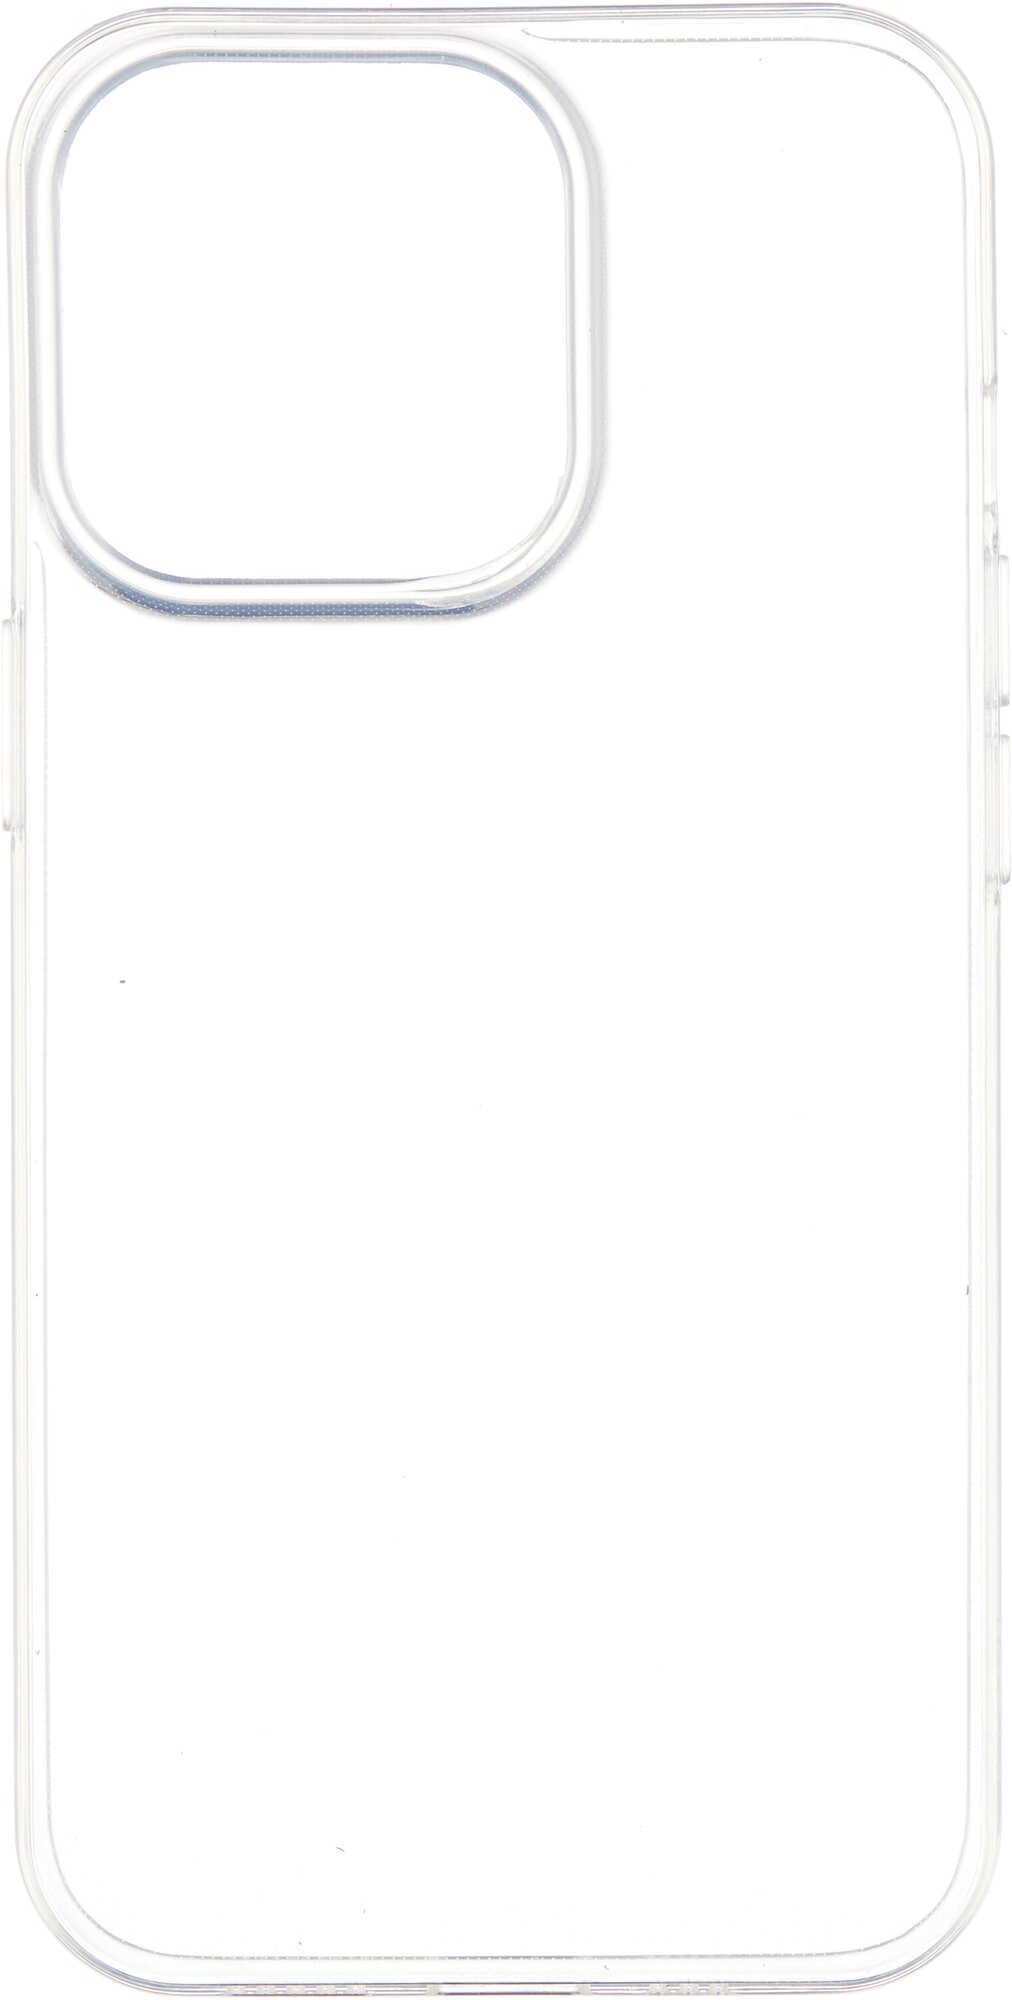 Накладка Deppa Gel Case для Apple iPhone 13 Pro прозрачная (арт.88114)